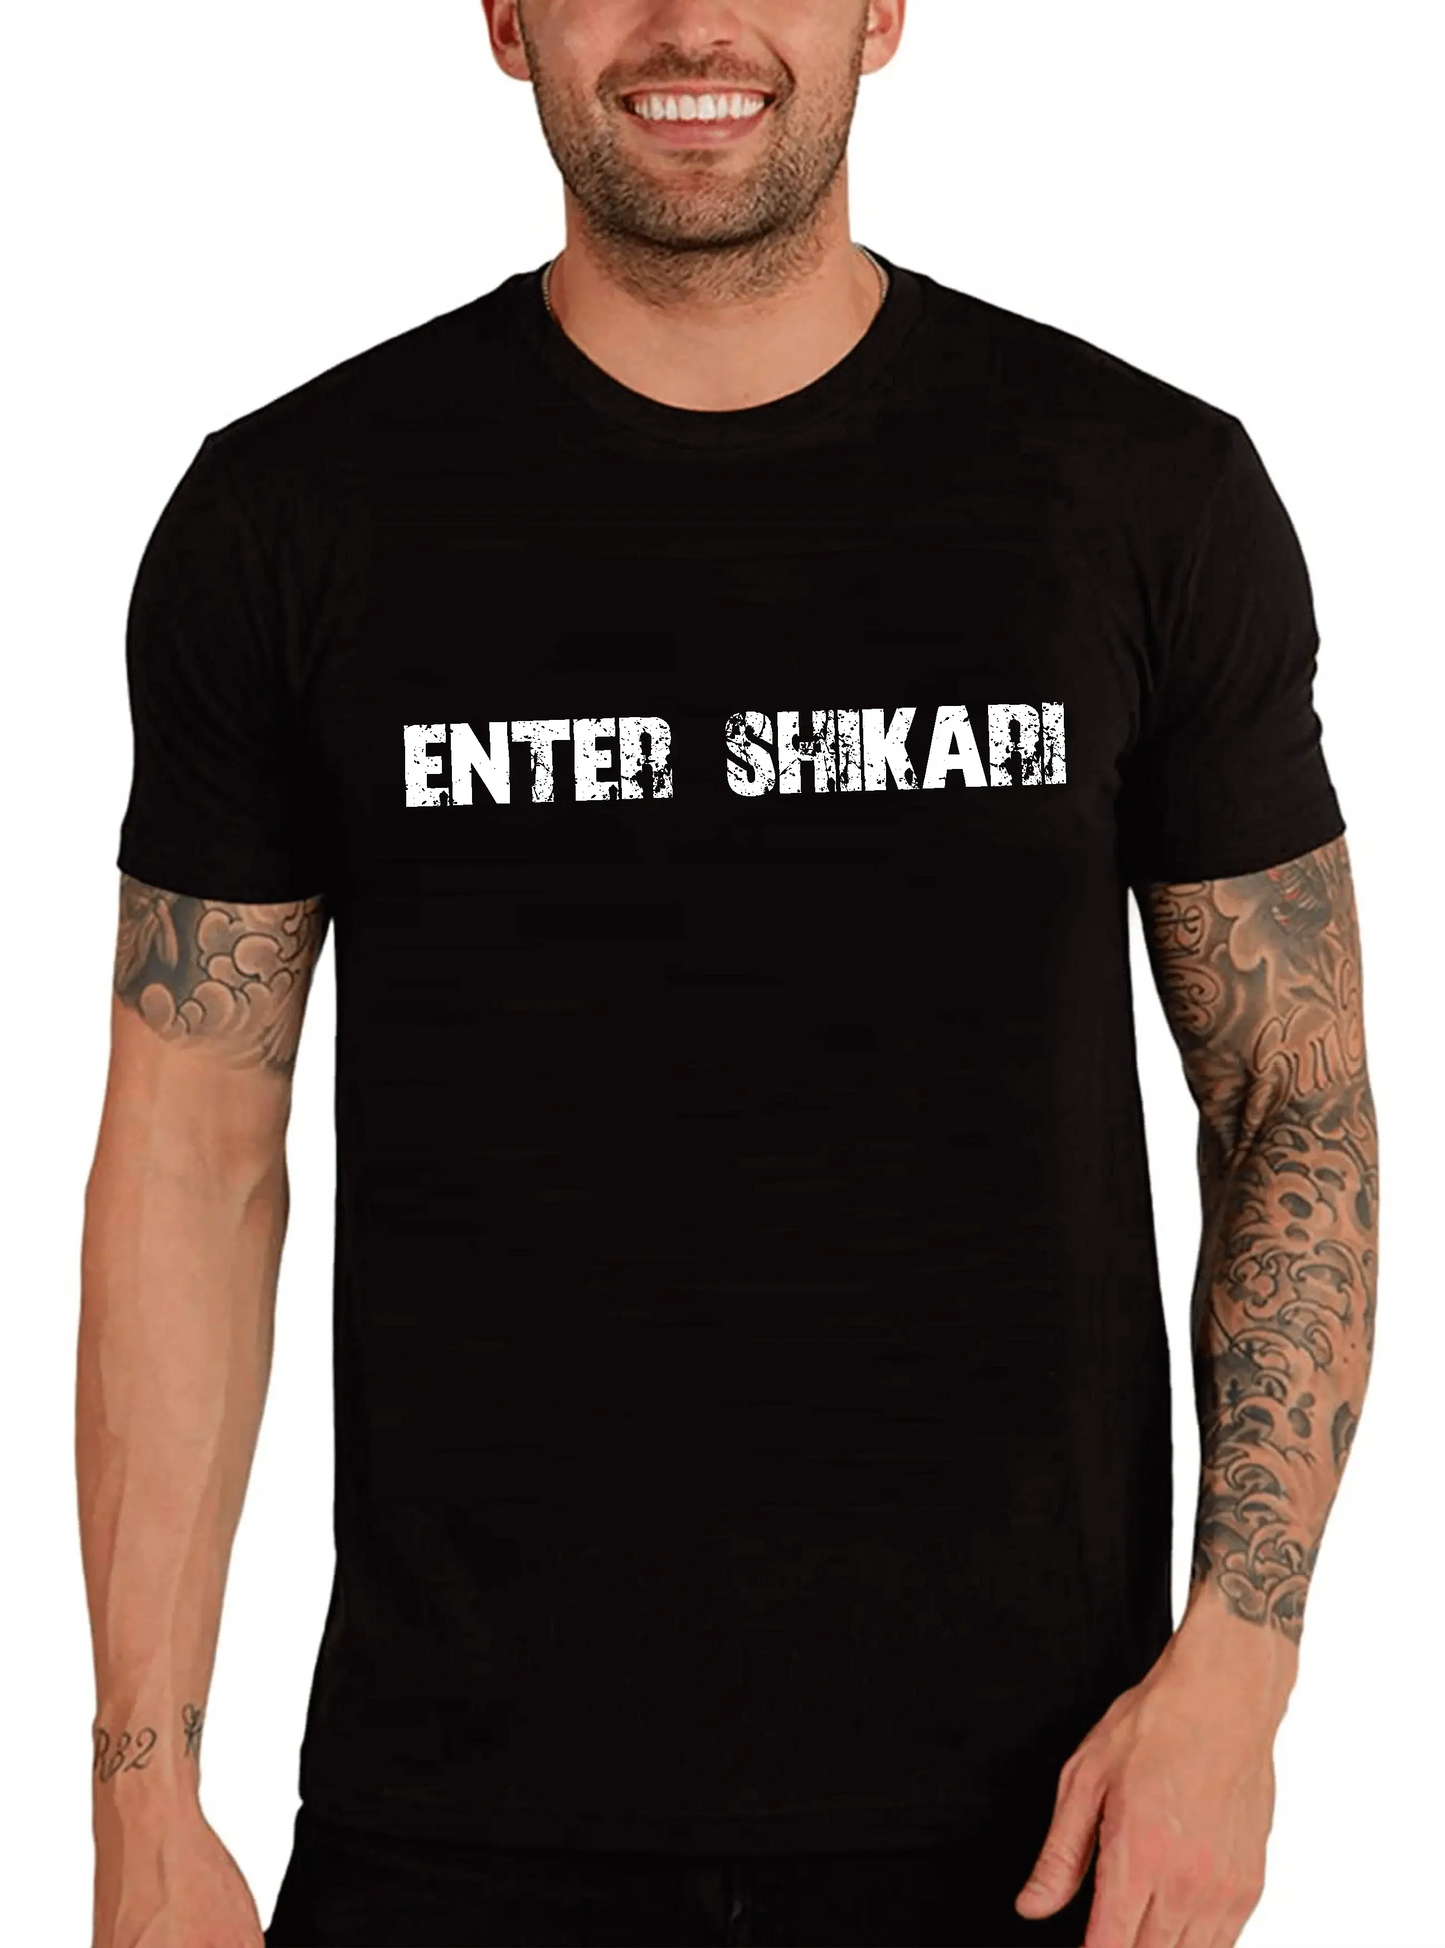 Men's Graphic T-Shirt Enter Shikari Eco-Friendly Limited Edition Short Sleeve Tee-Shirt Vintage Birthday Gift Novelty